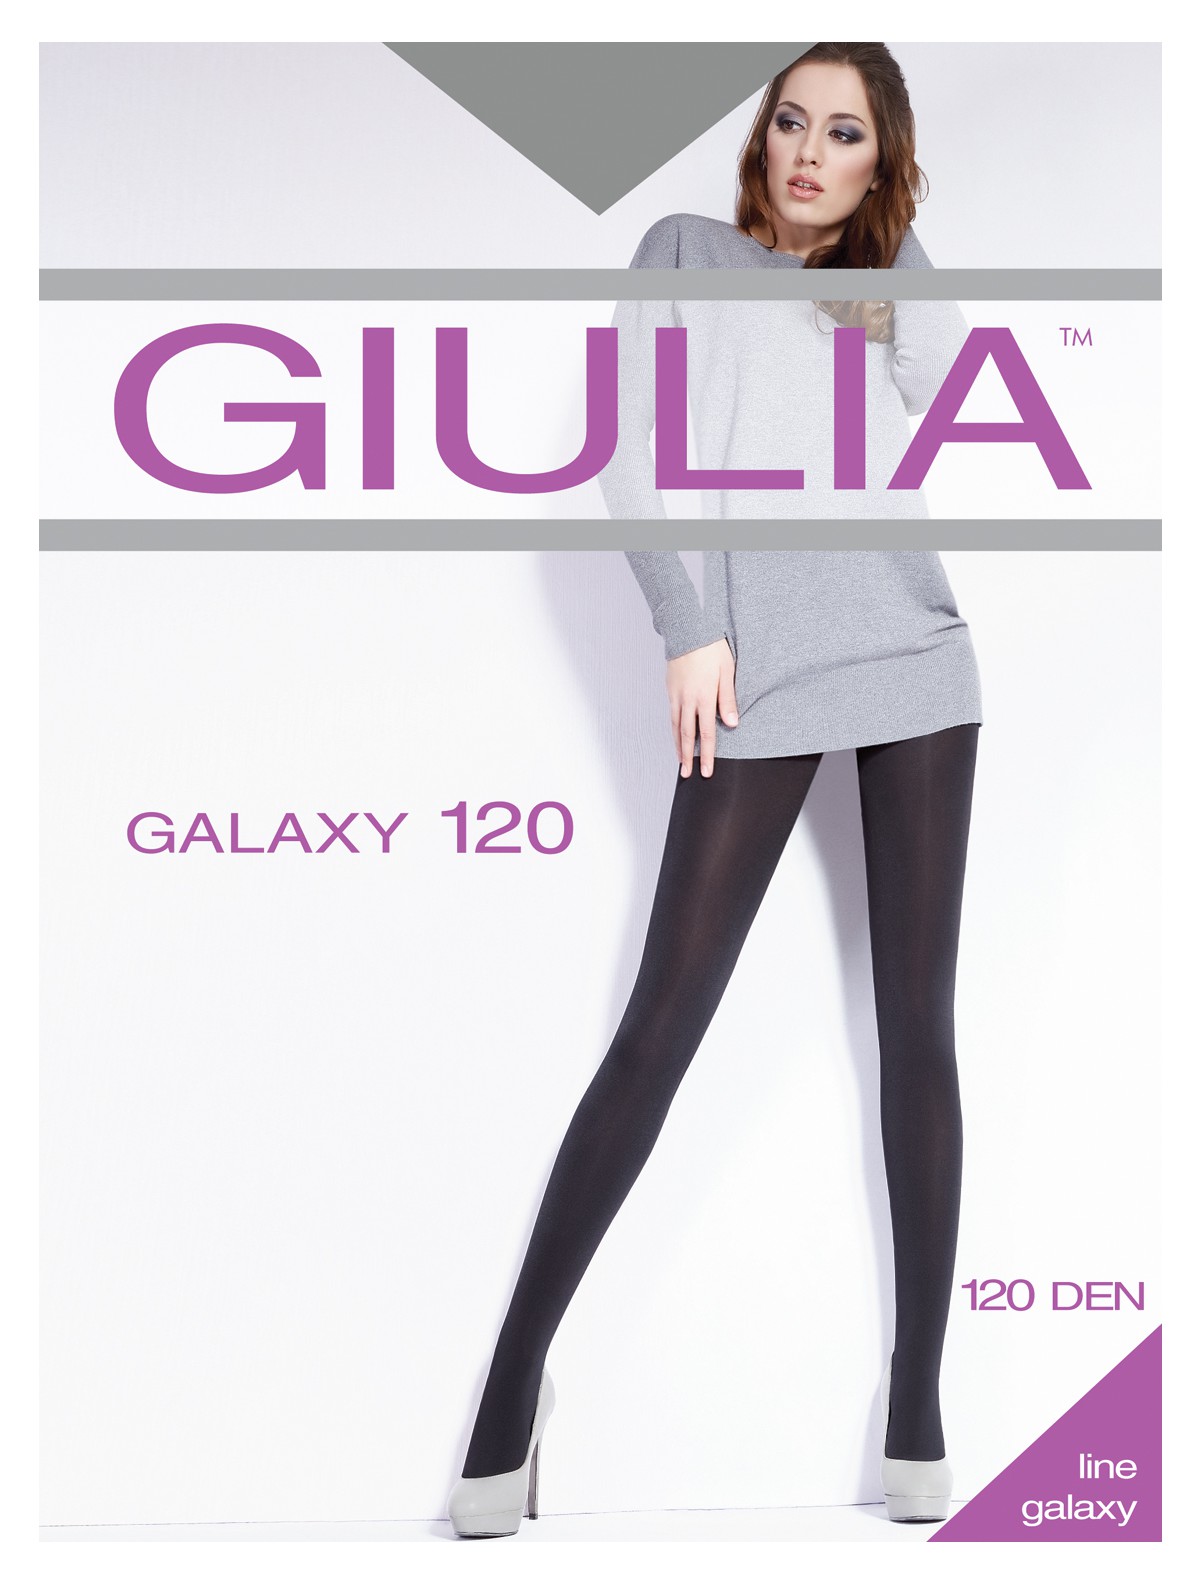 Giulia Galaxy 120 Strumpfhose - fumo, nero, caffe, brombeere, china red,  strong